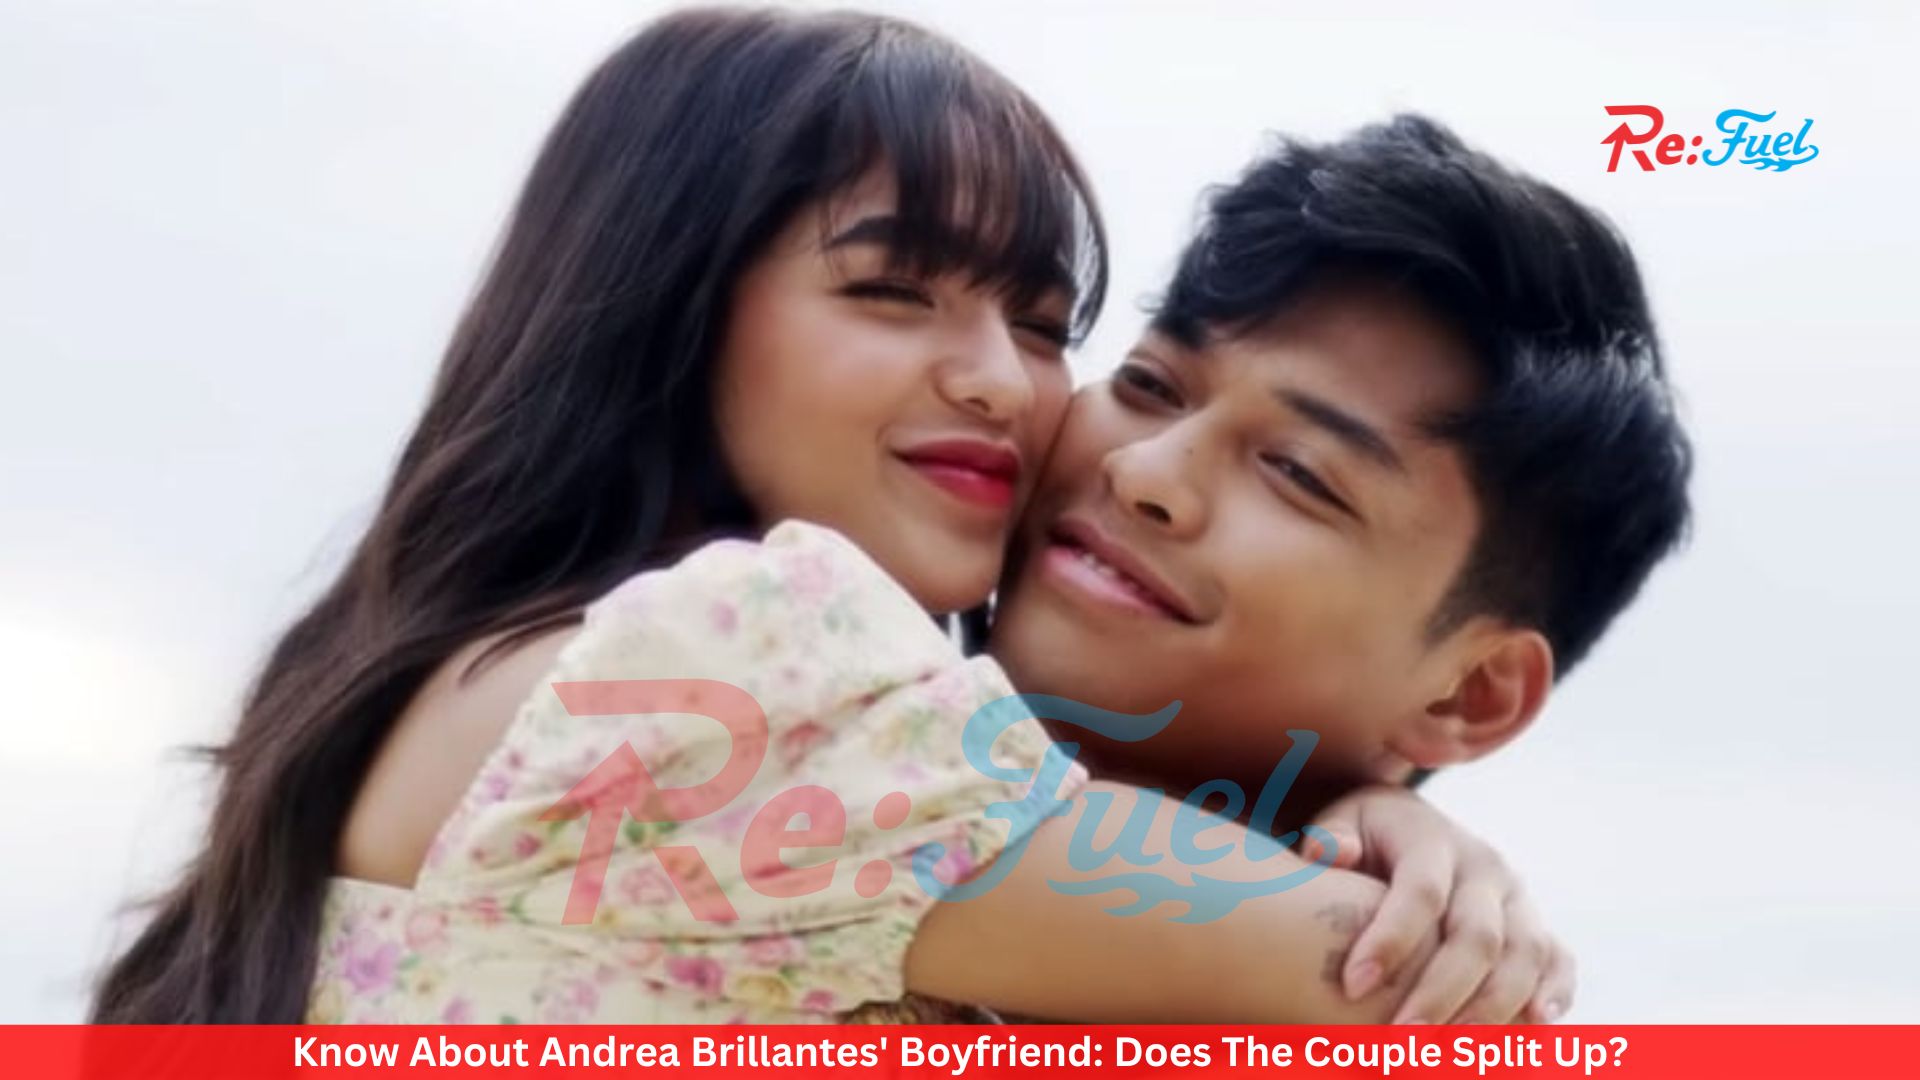 Know About Andrea Brillantes' Boyfriend: Does The Couple Split Up?